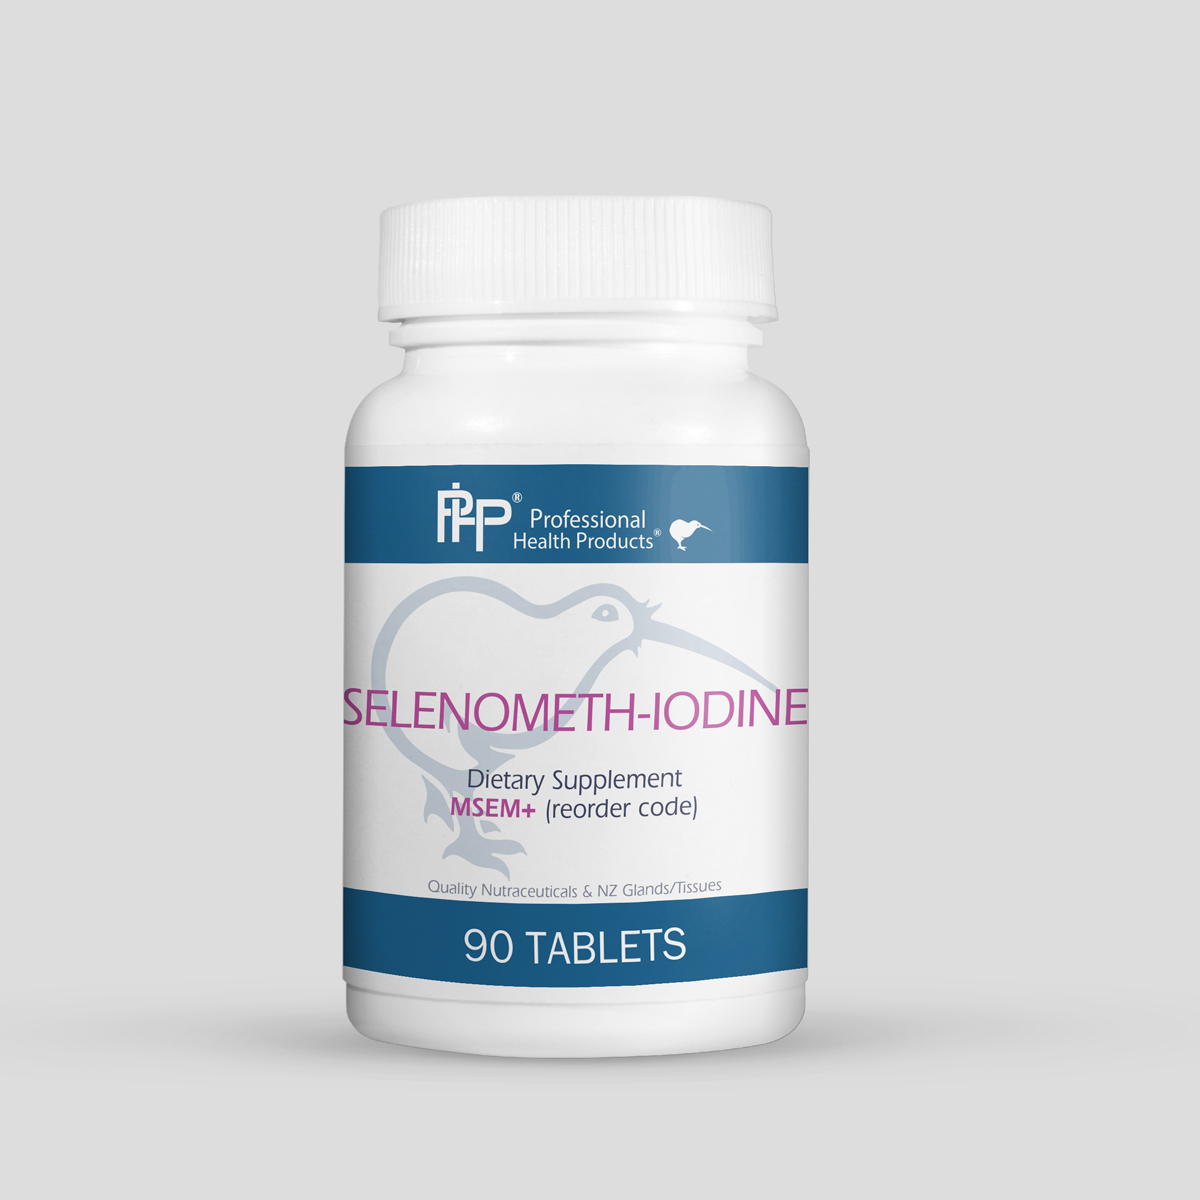 Selenometh-Iodine